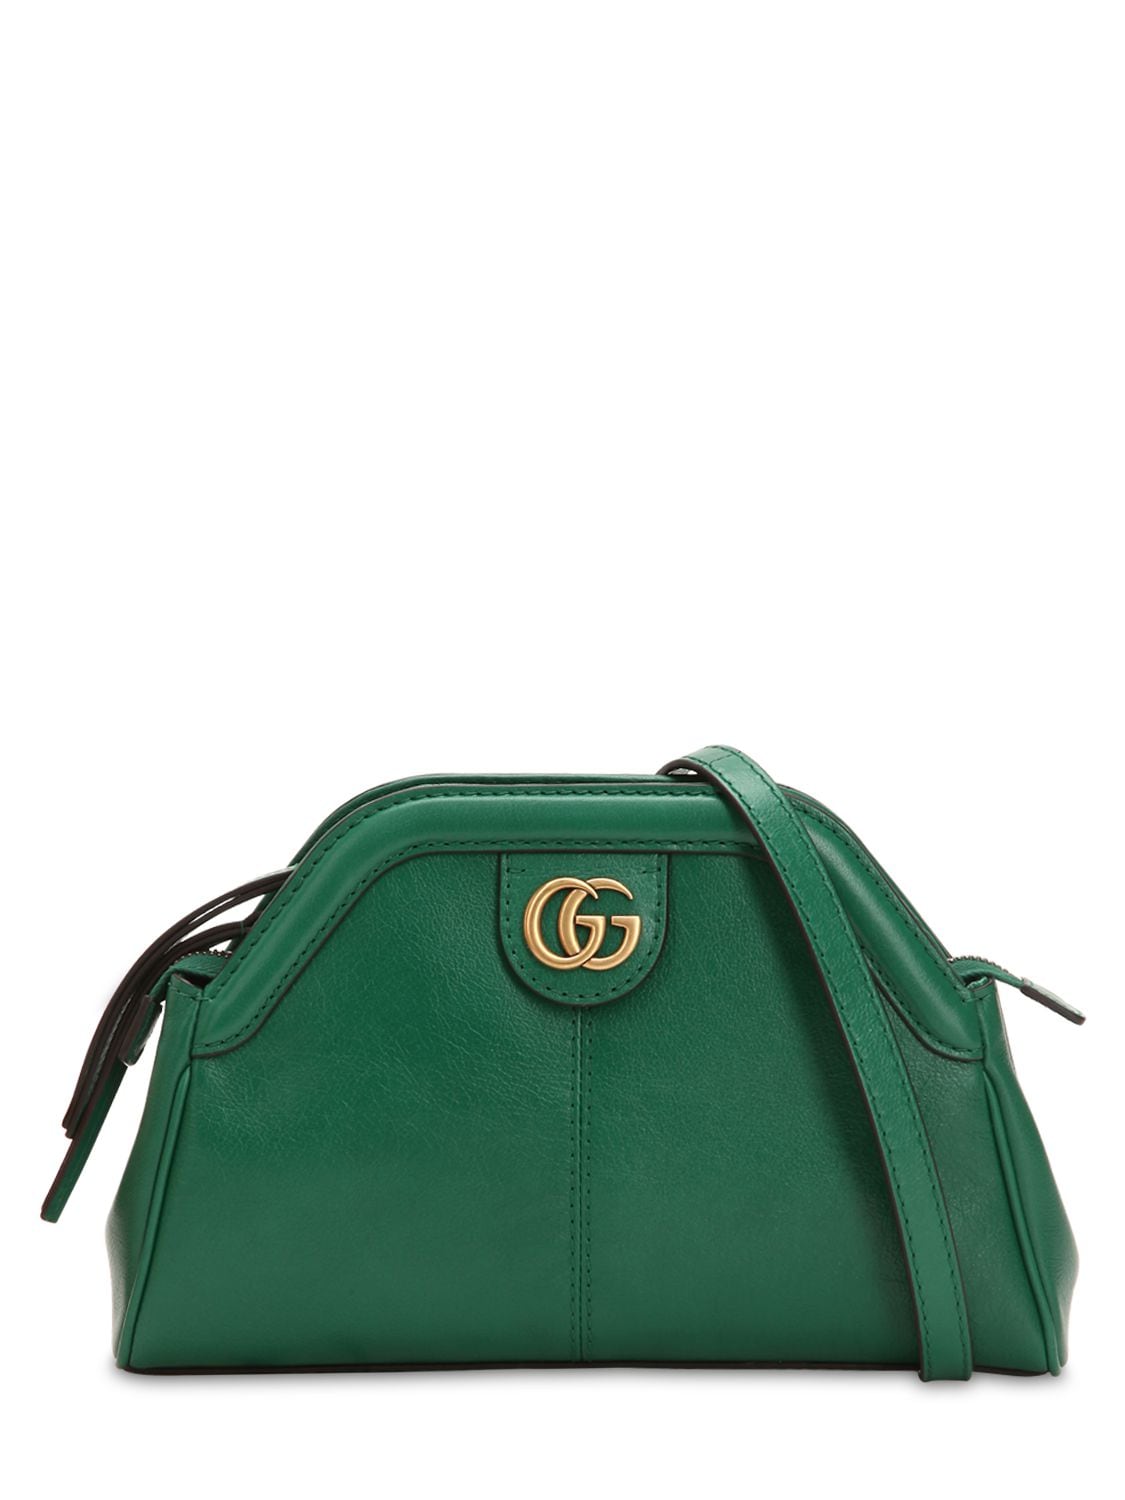 Gucci Leather Shoulder Bag In Green